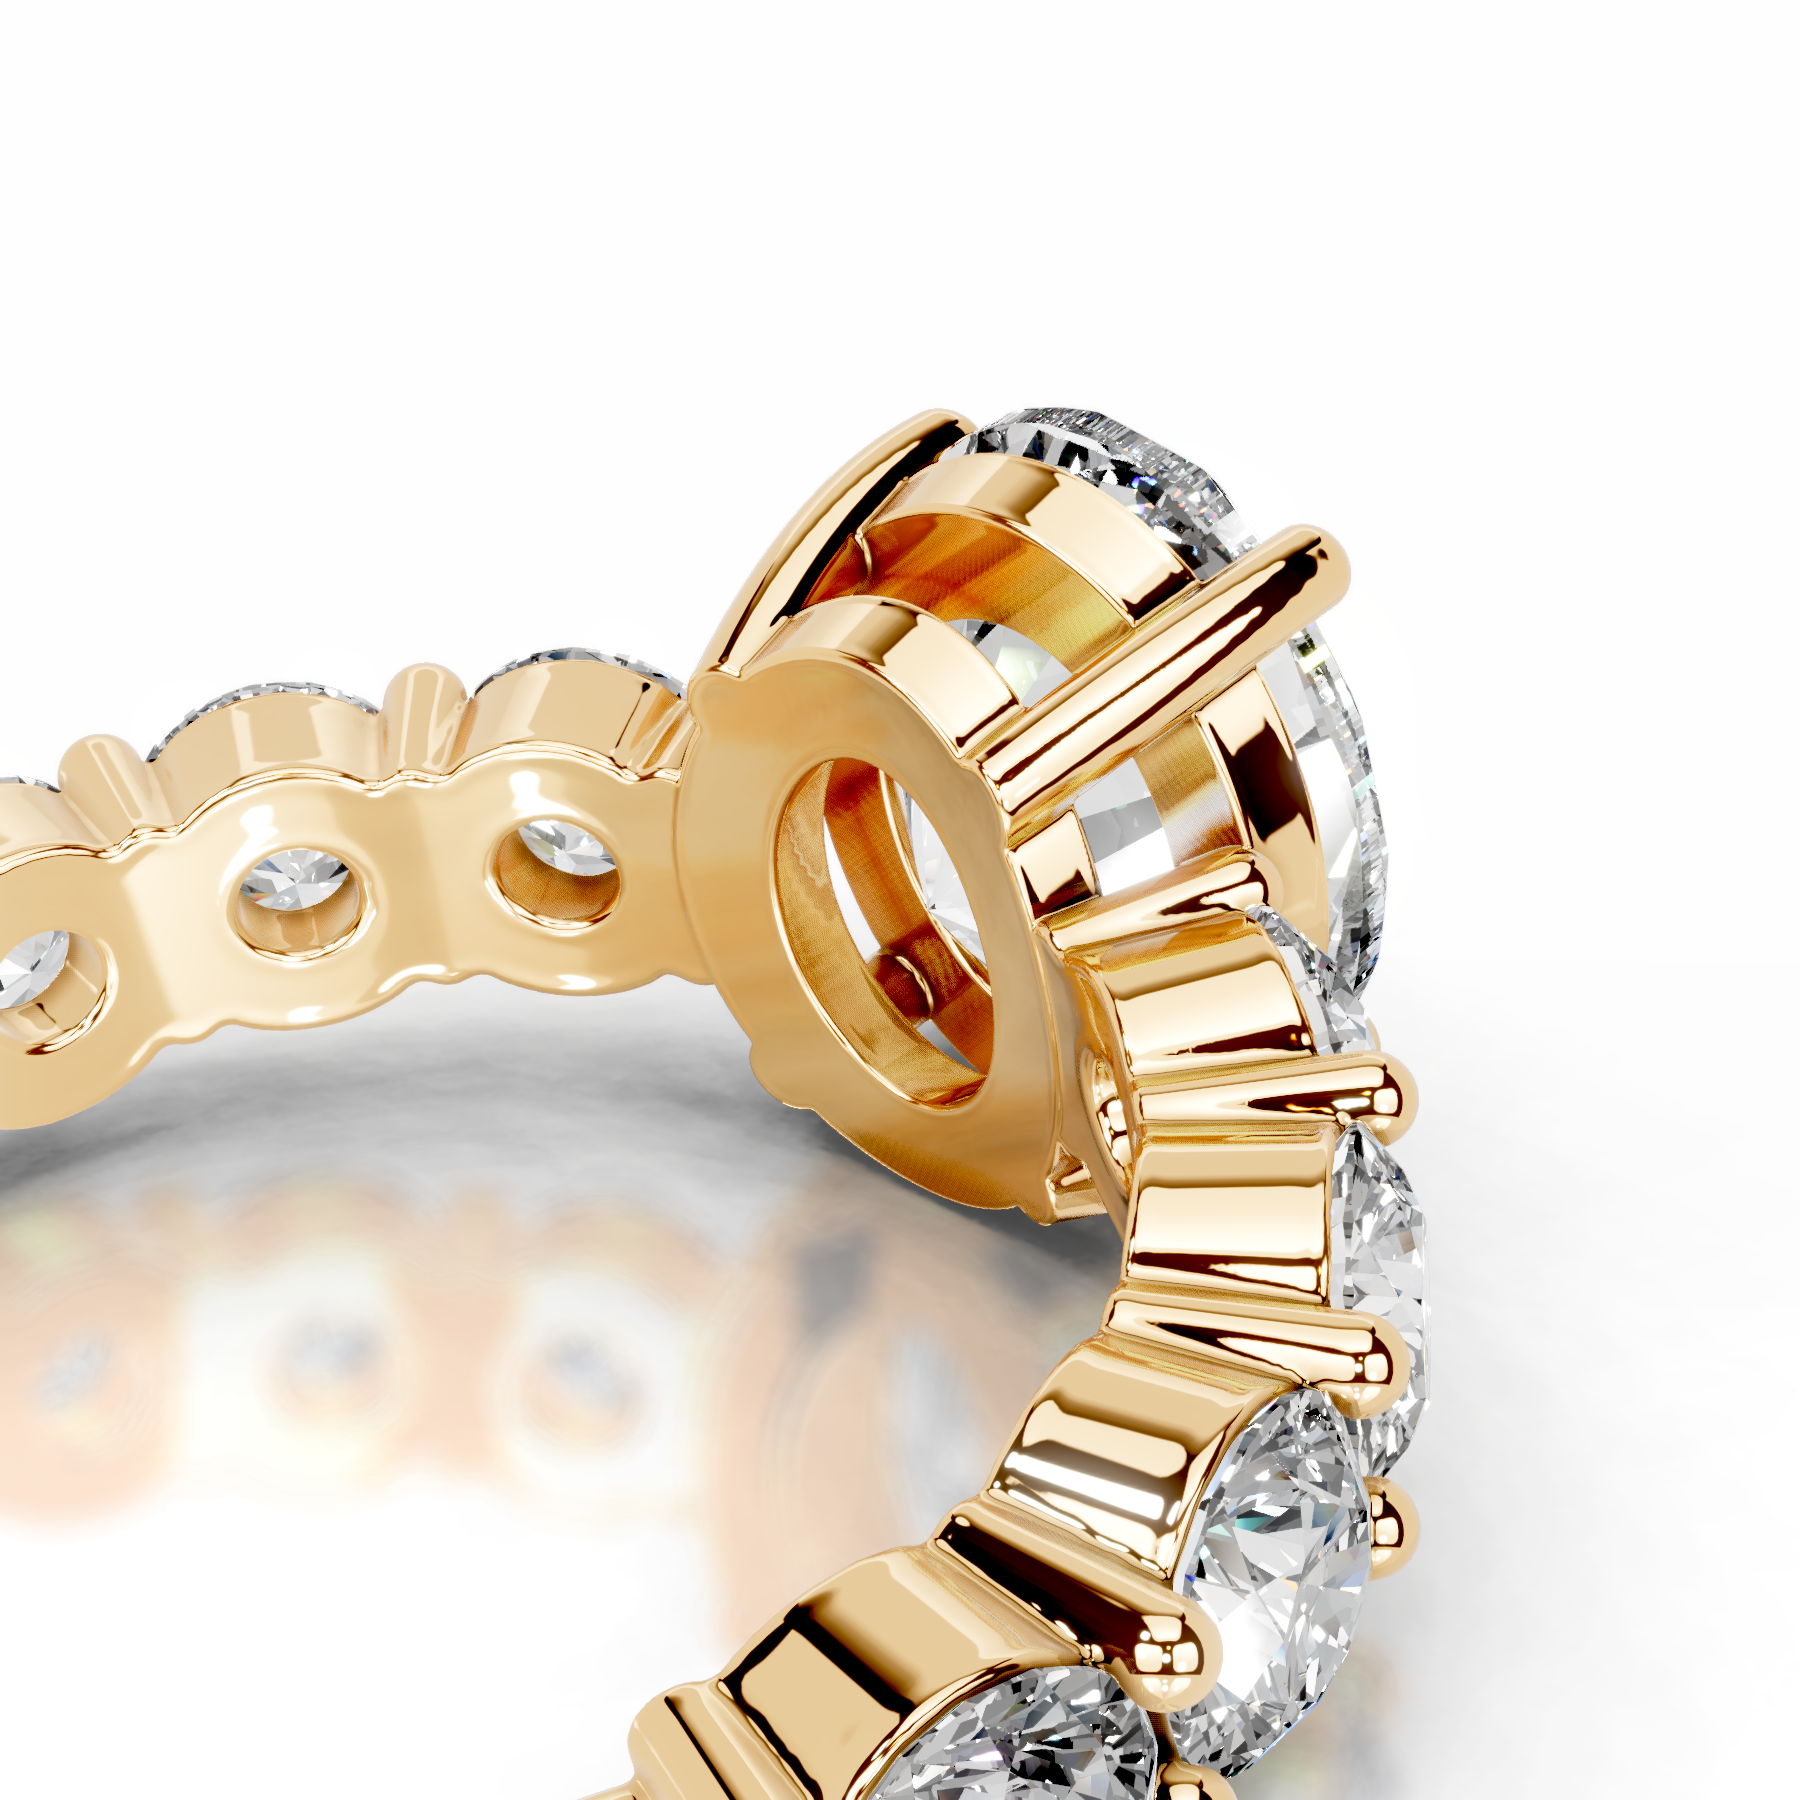 Odin Diamond Engagement Ring   (4 Carat) -18K Yellow Gold